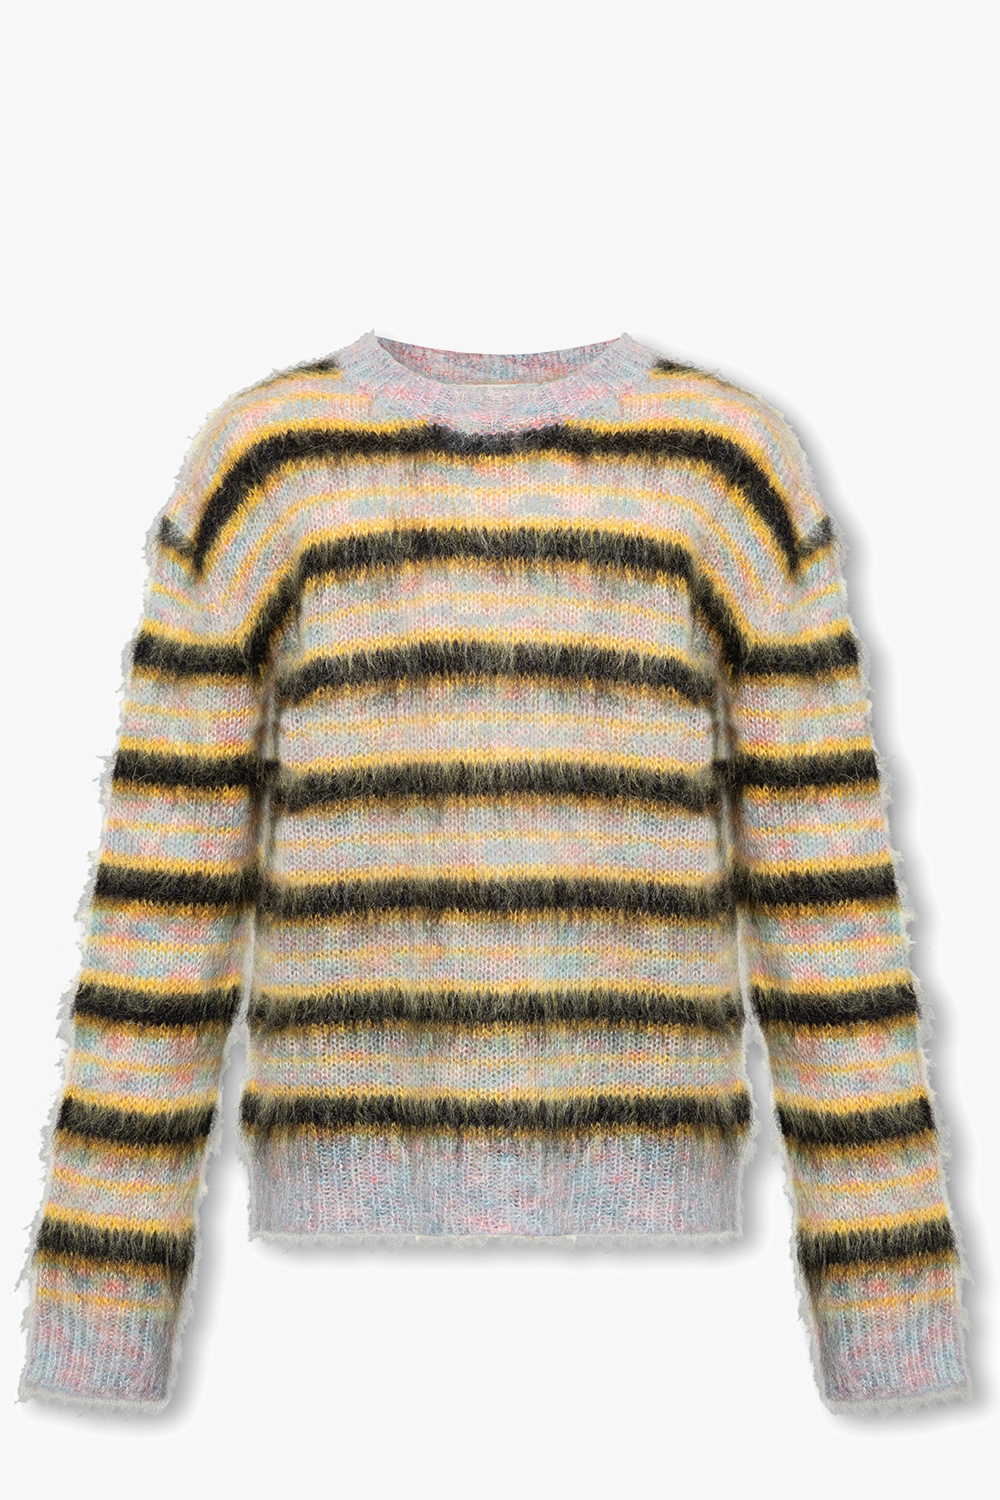 Multicolour Striped sweater Marni - GenesinlifeShops Canada - Marni  grid-print skirt